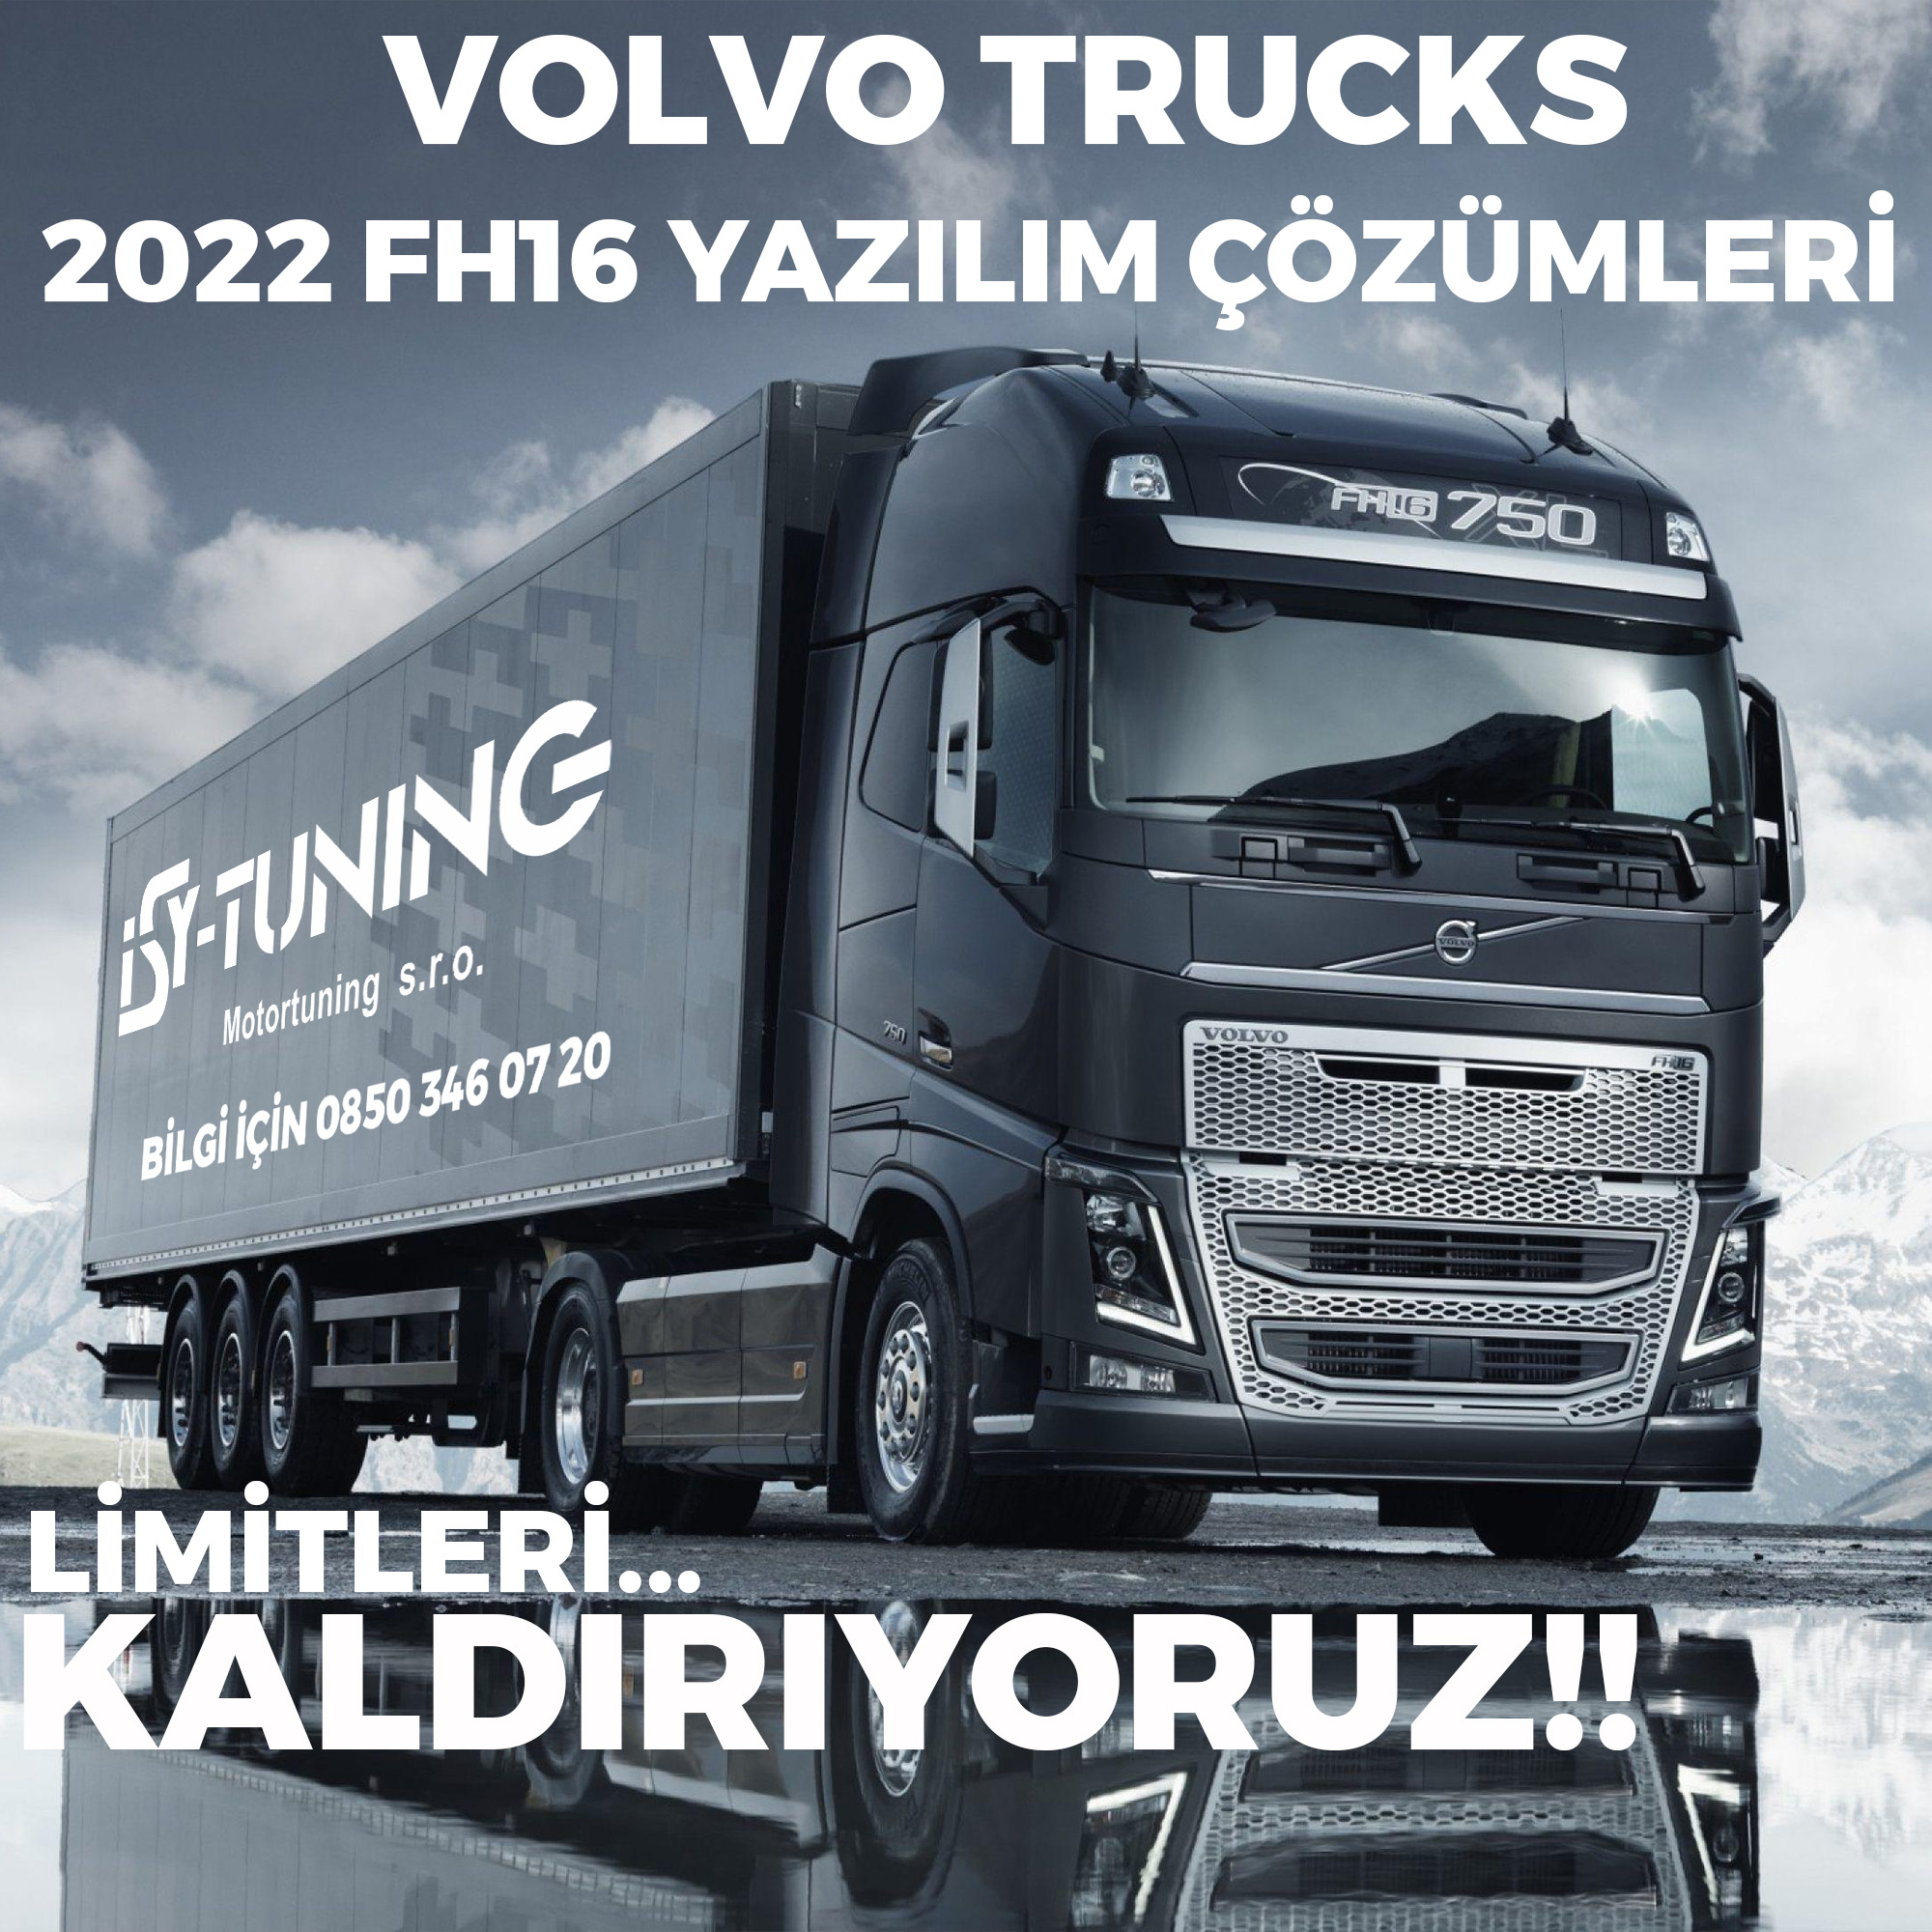 Volvo Trucks 2022 Yazilim Cözümleri